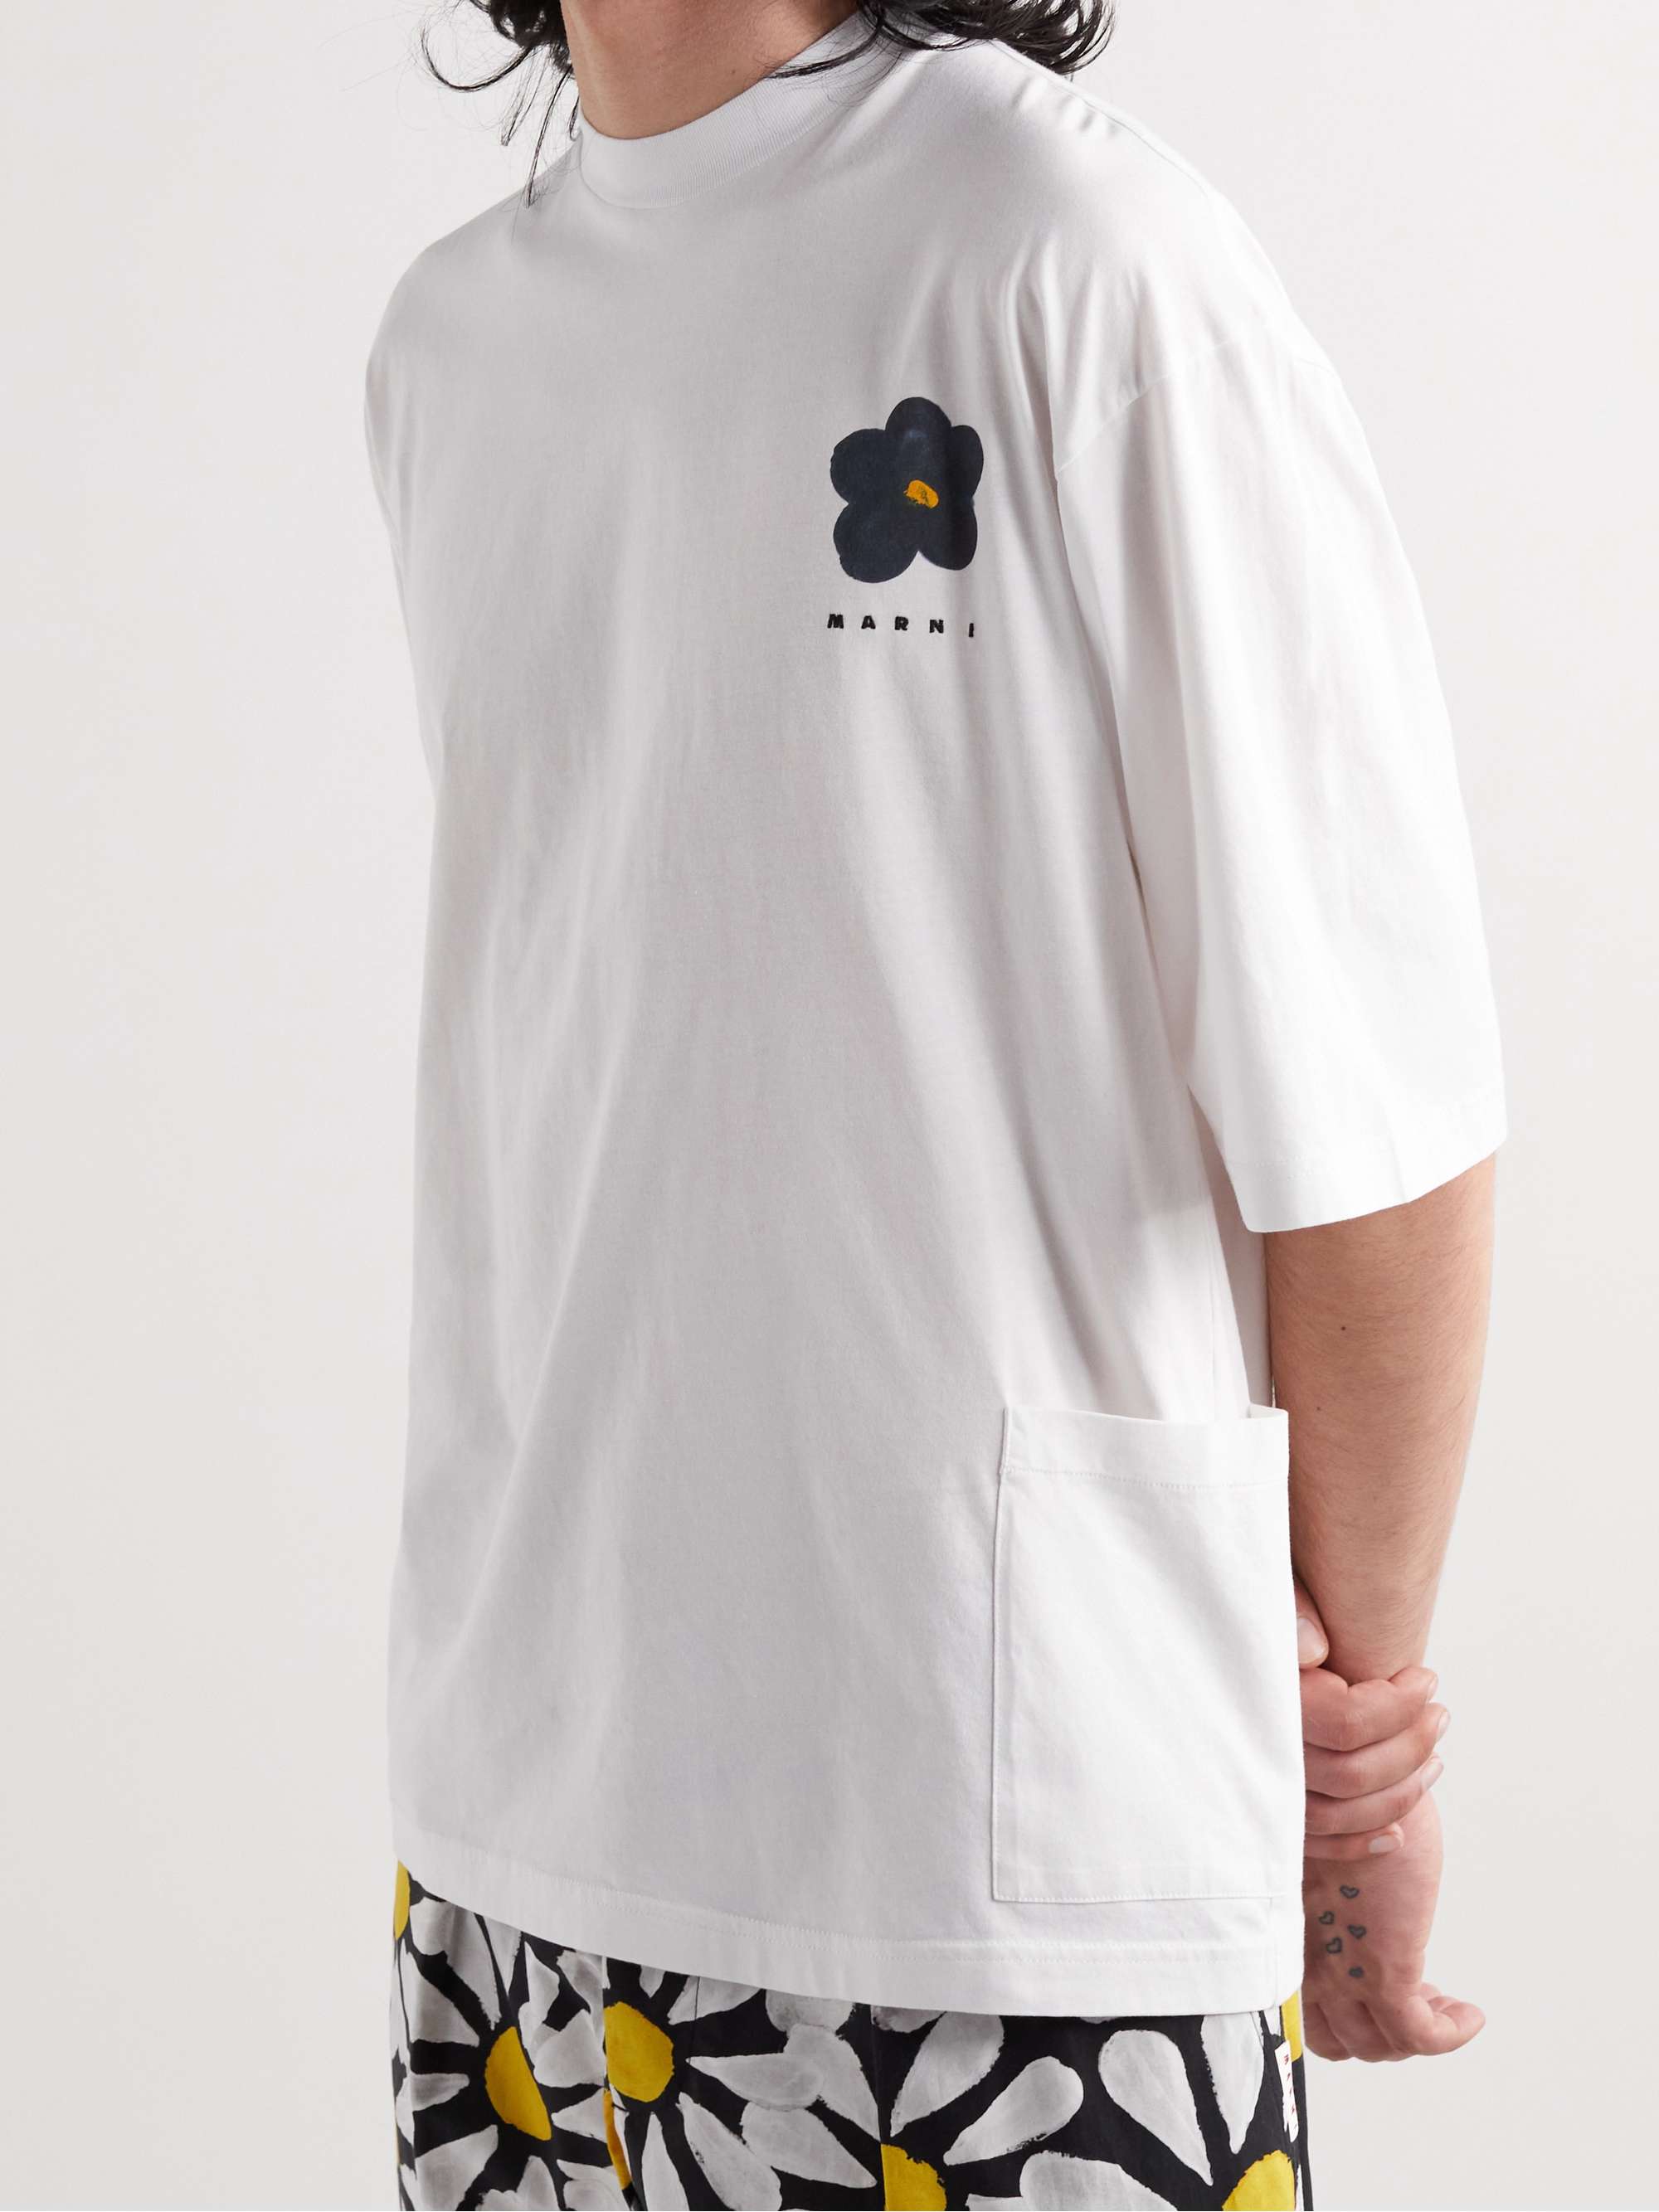 MARNI Floral-Print Cotton-Jersey T-Shirt